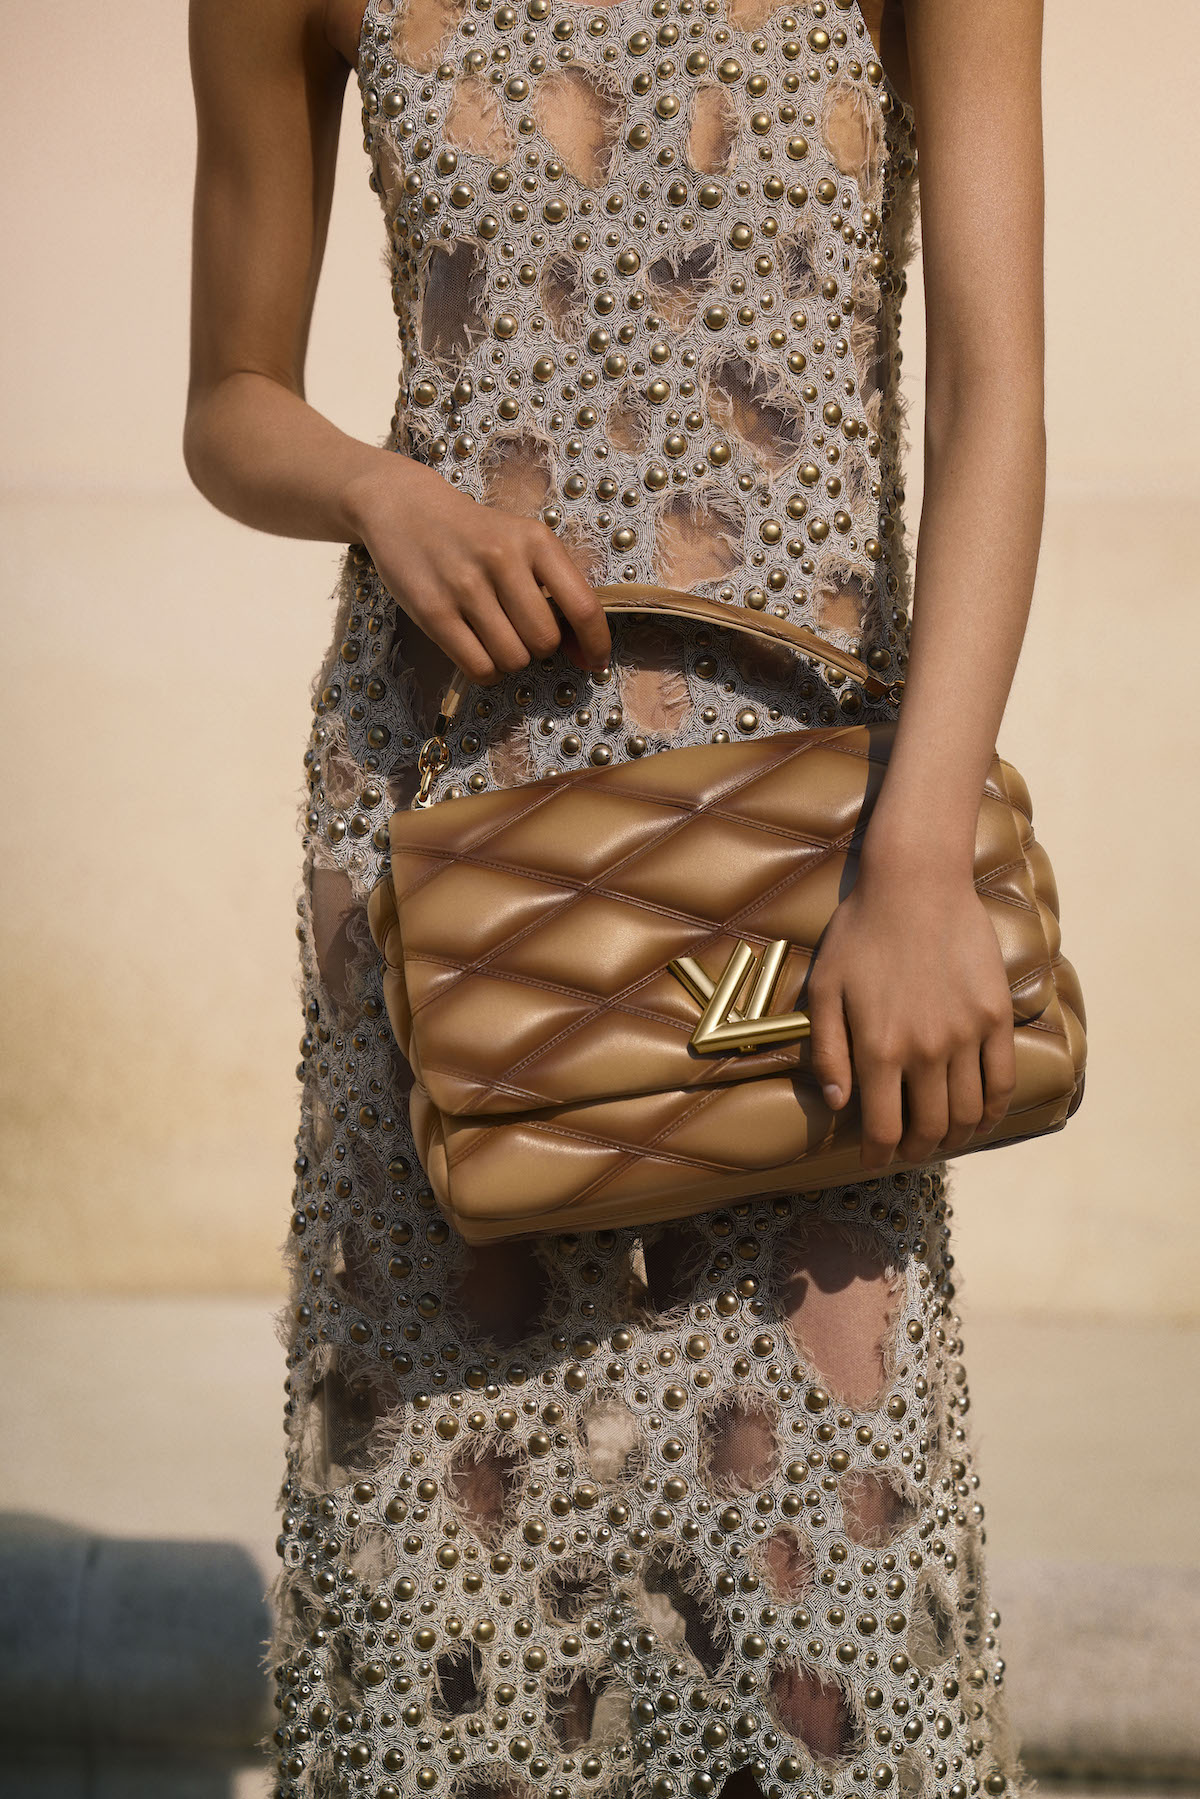 Louis Vuitton Ltd. Ed. Sunburst Crossbody Bag- Denim with Neo Pink